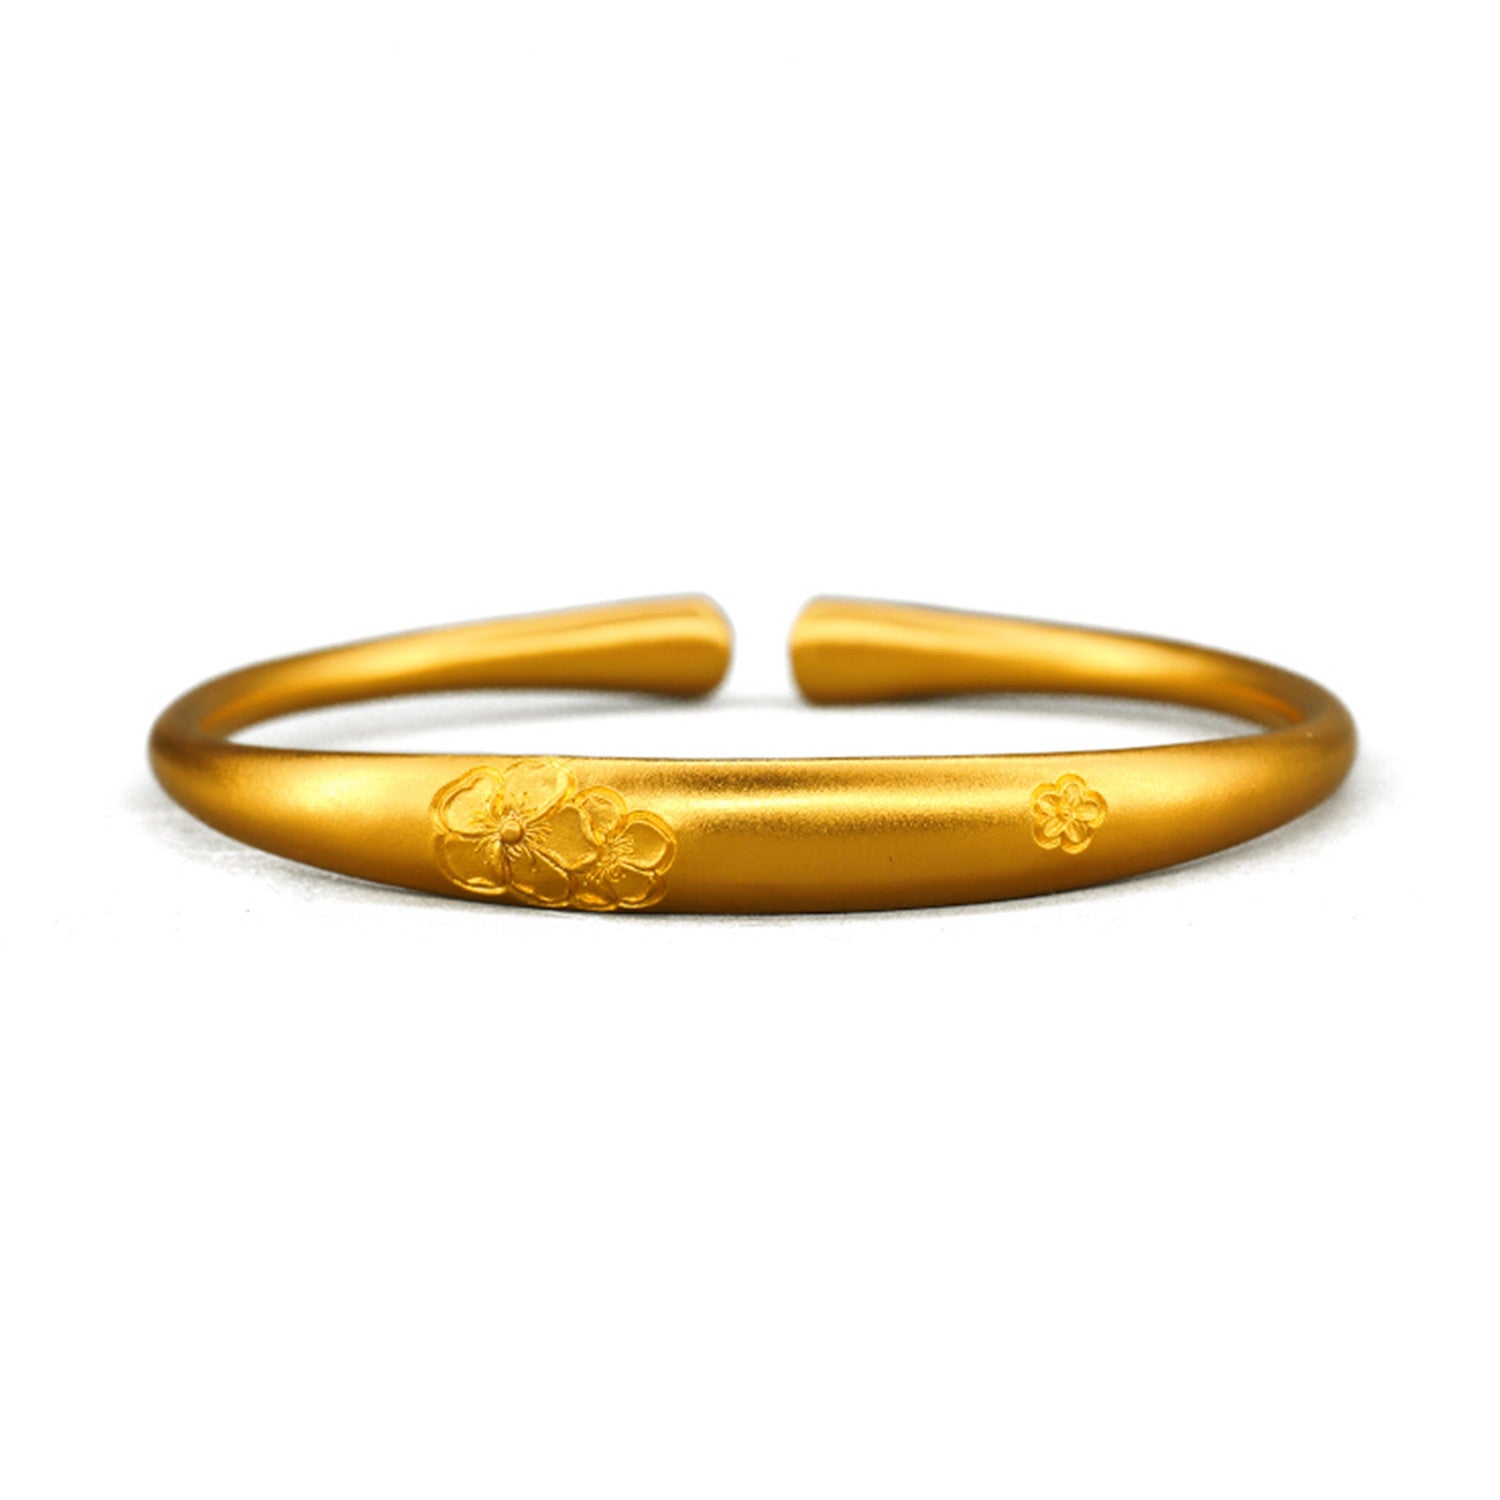 EVECOCO Full Gold Wedding Bracelet,For Female,Hand Forging Simplicity Fashion,45g